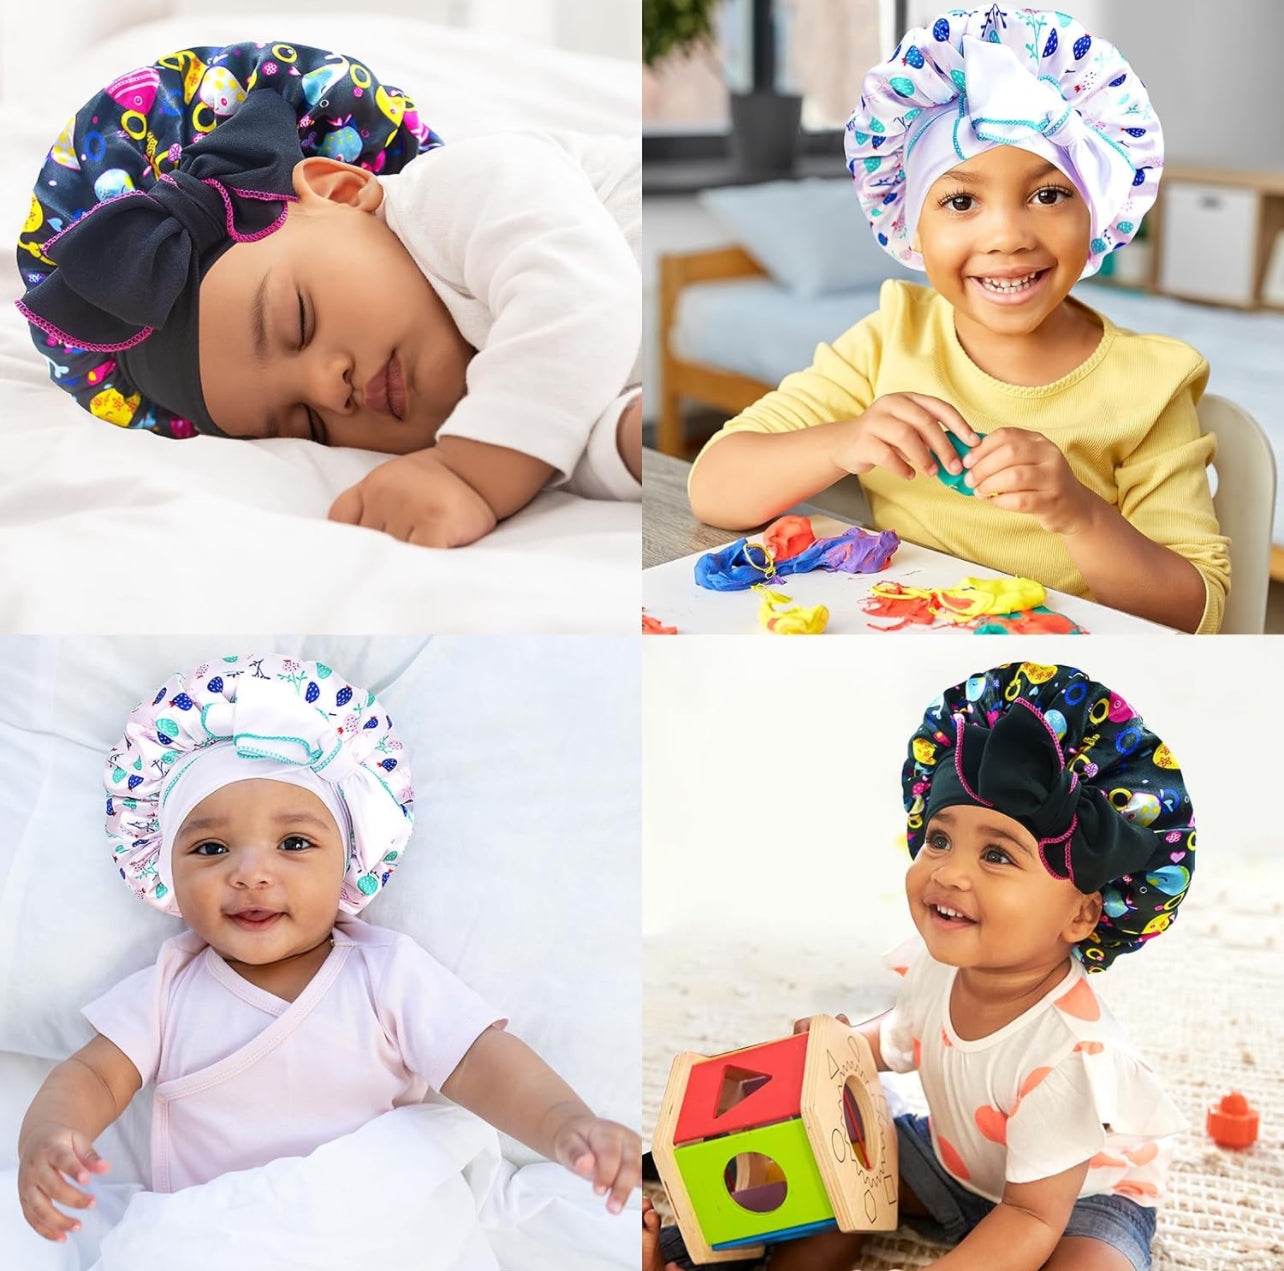 2pcs Pack Pattern Baby Bonnet Kids Bonnet Infant Satin Silk Hair Bonnets for Girls Boys Toddler Newborn Infants with tie Band Bow 0-36 Month